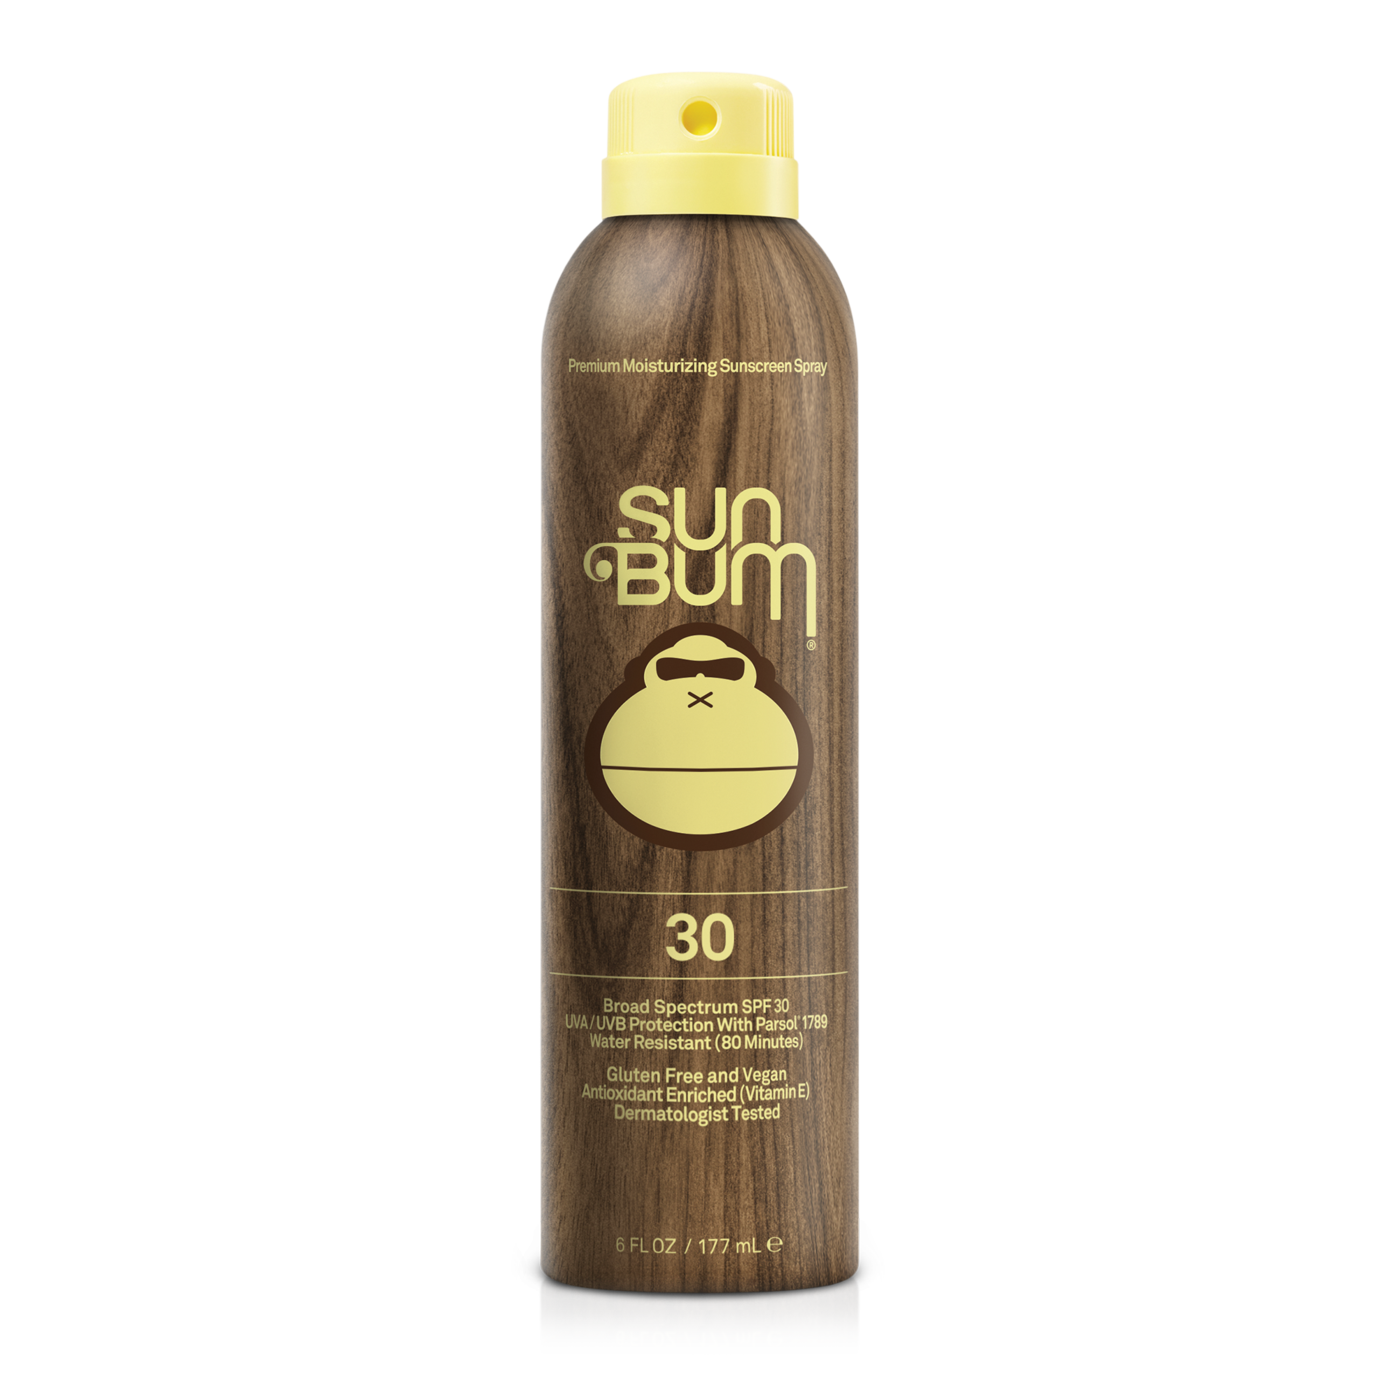 Sun Bum SPRAY SUNSCREEN BROAD SPECTRUM SPF 30